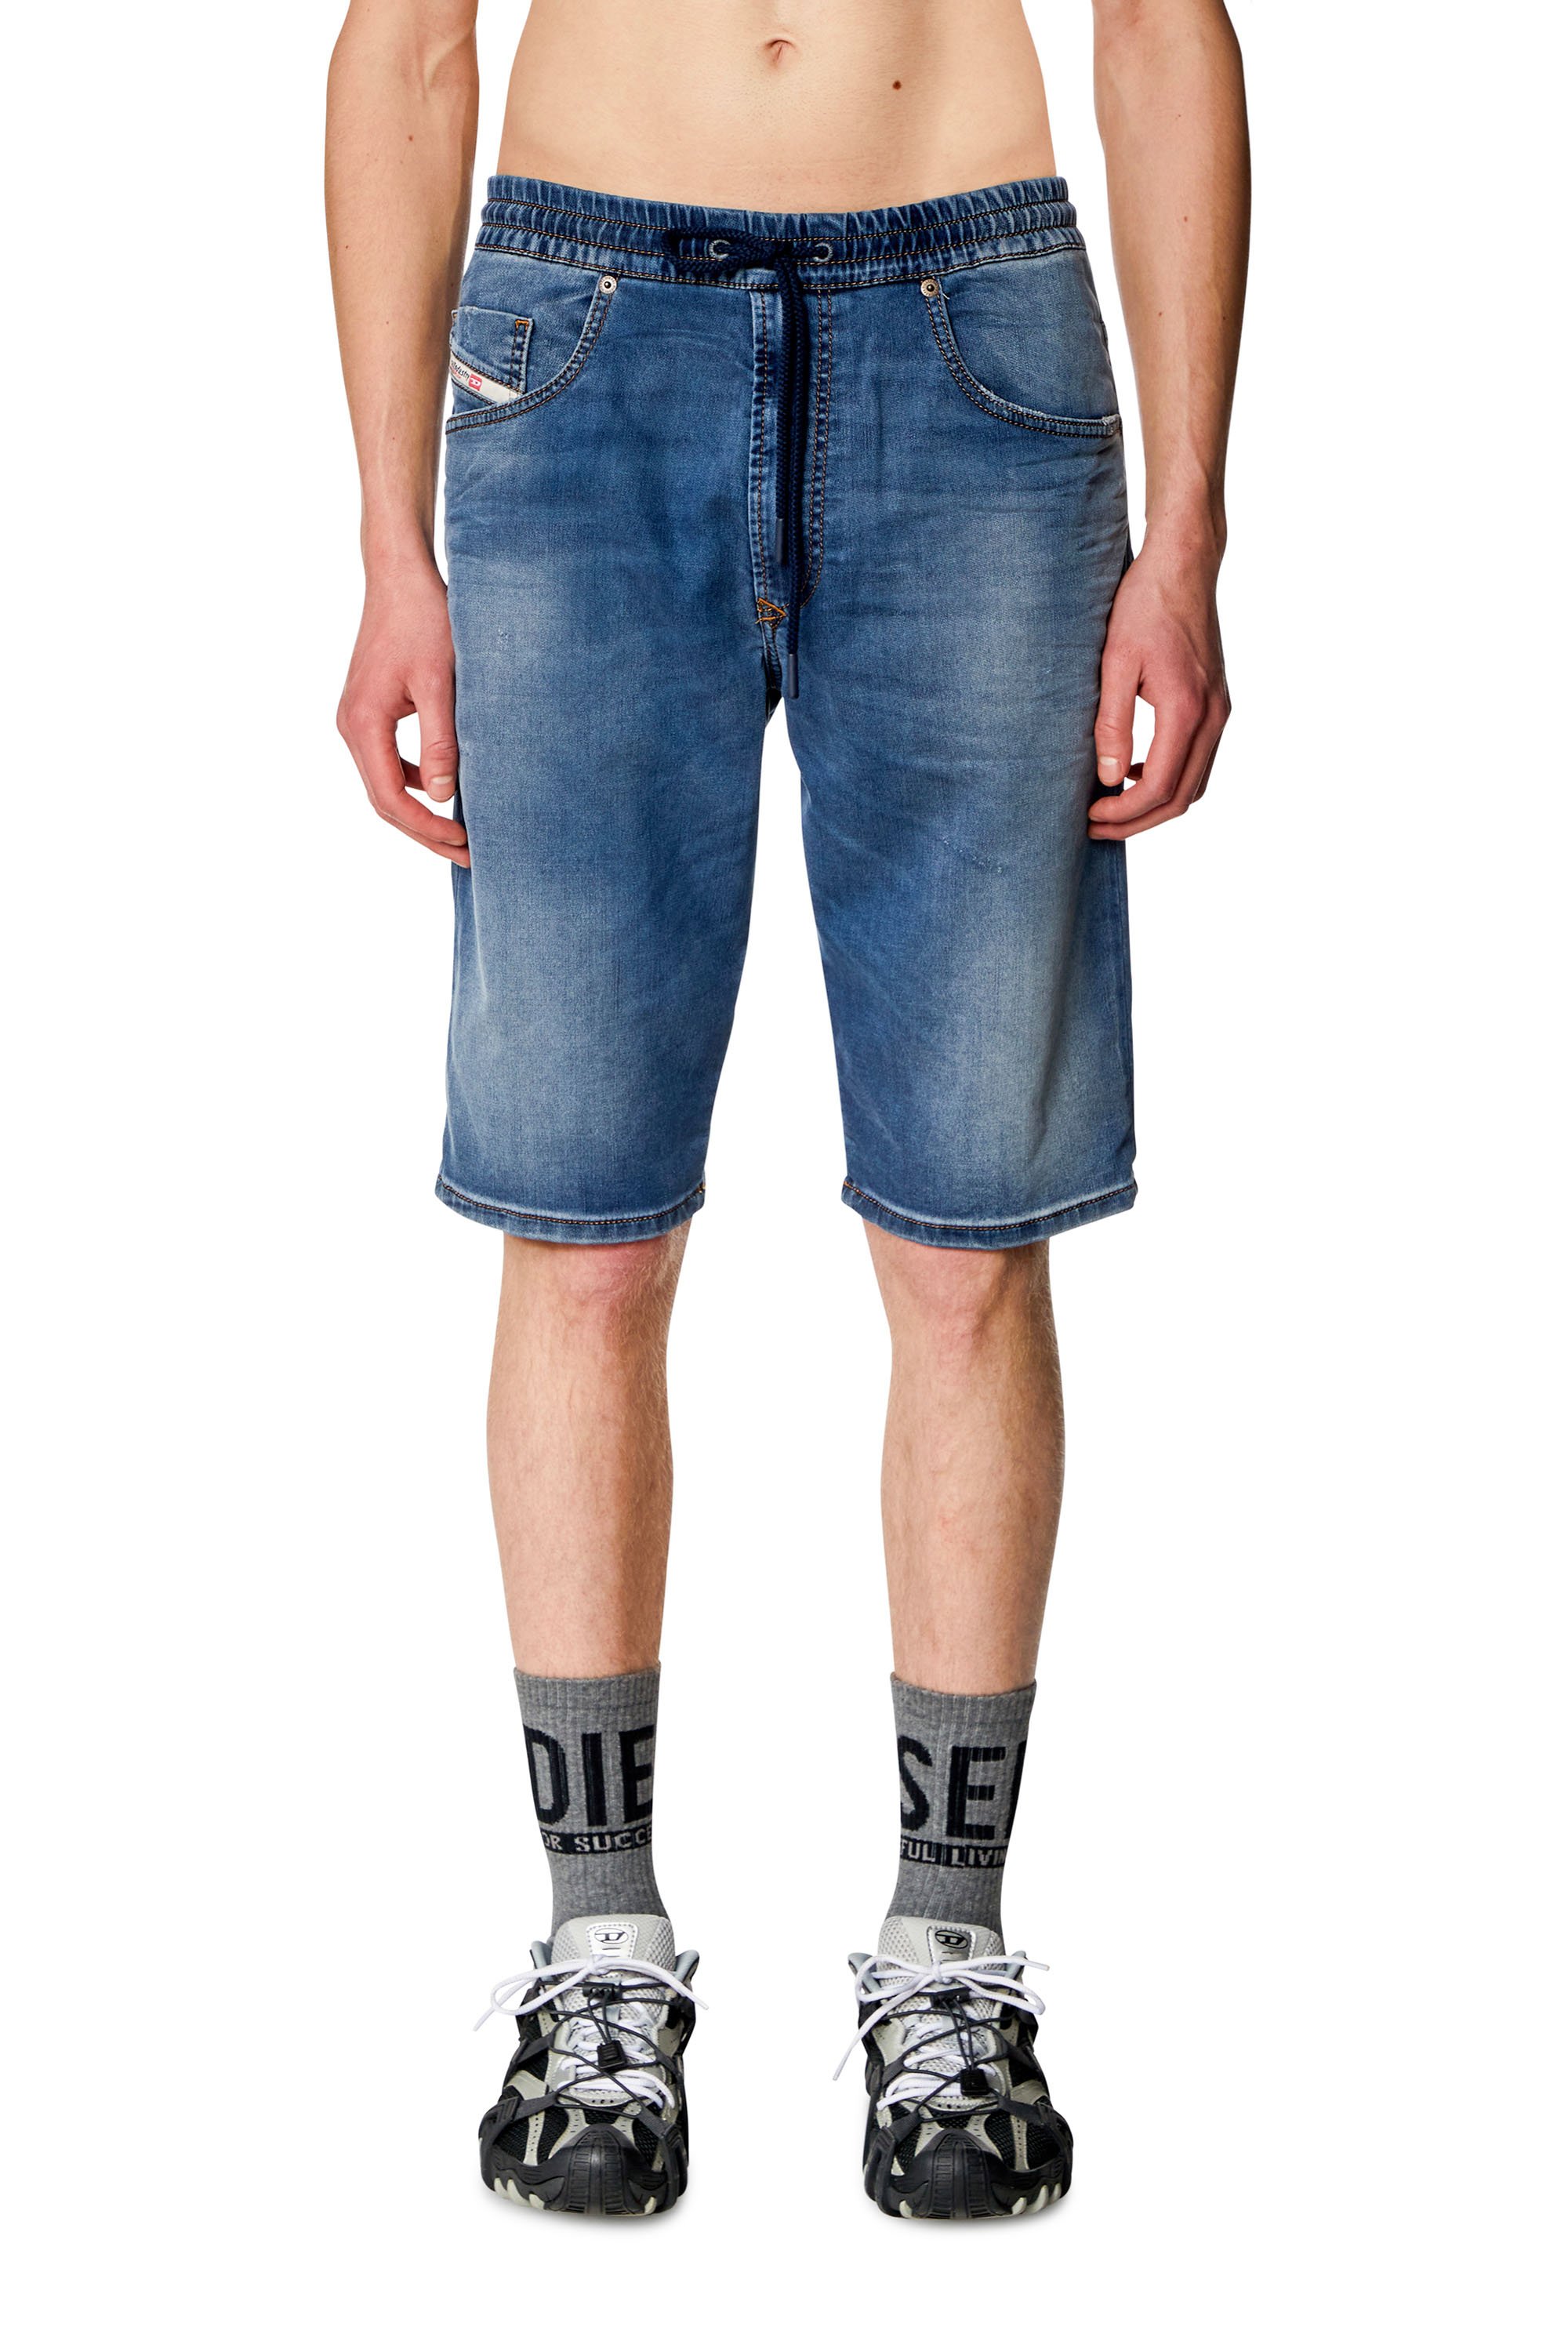 Diesel - Short chino en Jogg Jeans - Shorts - Homme - Bleu